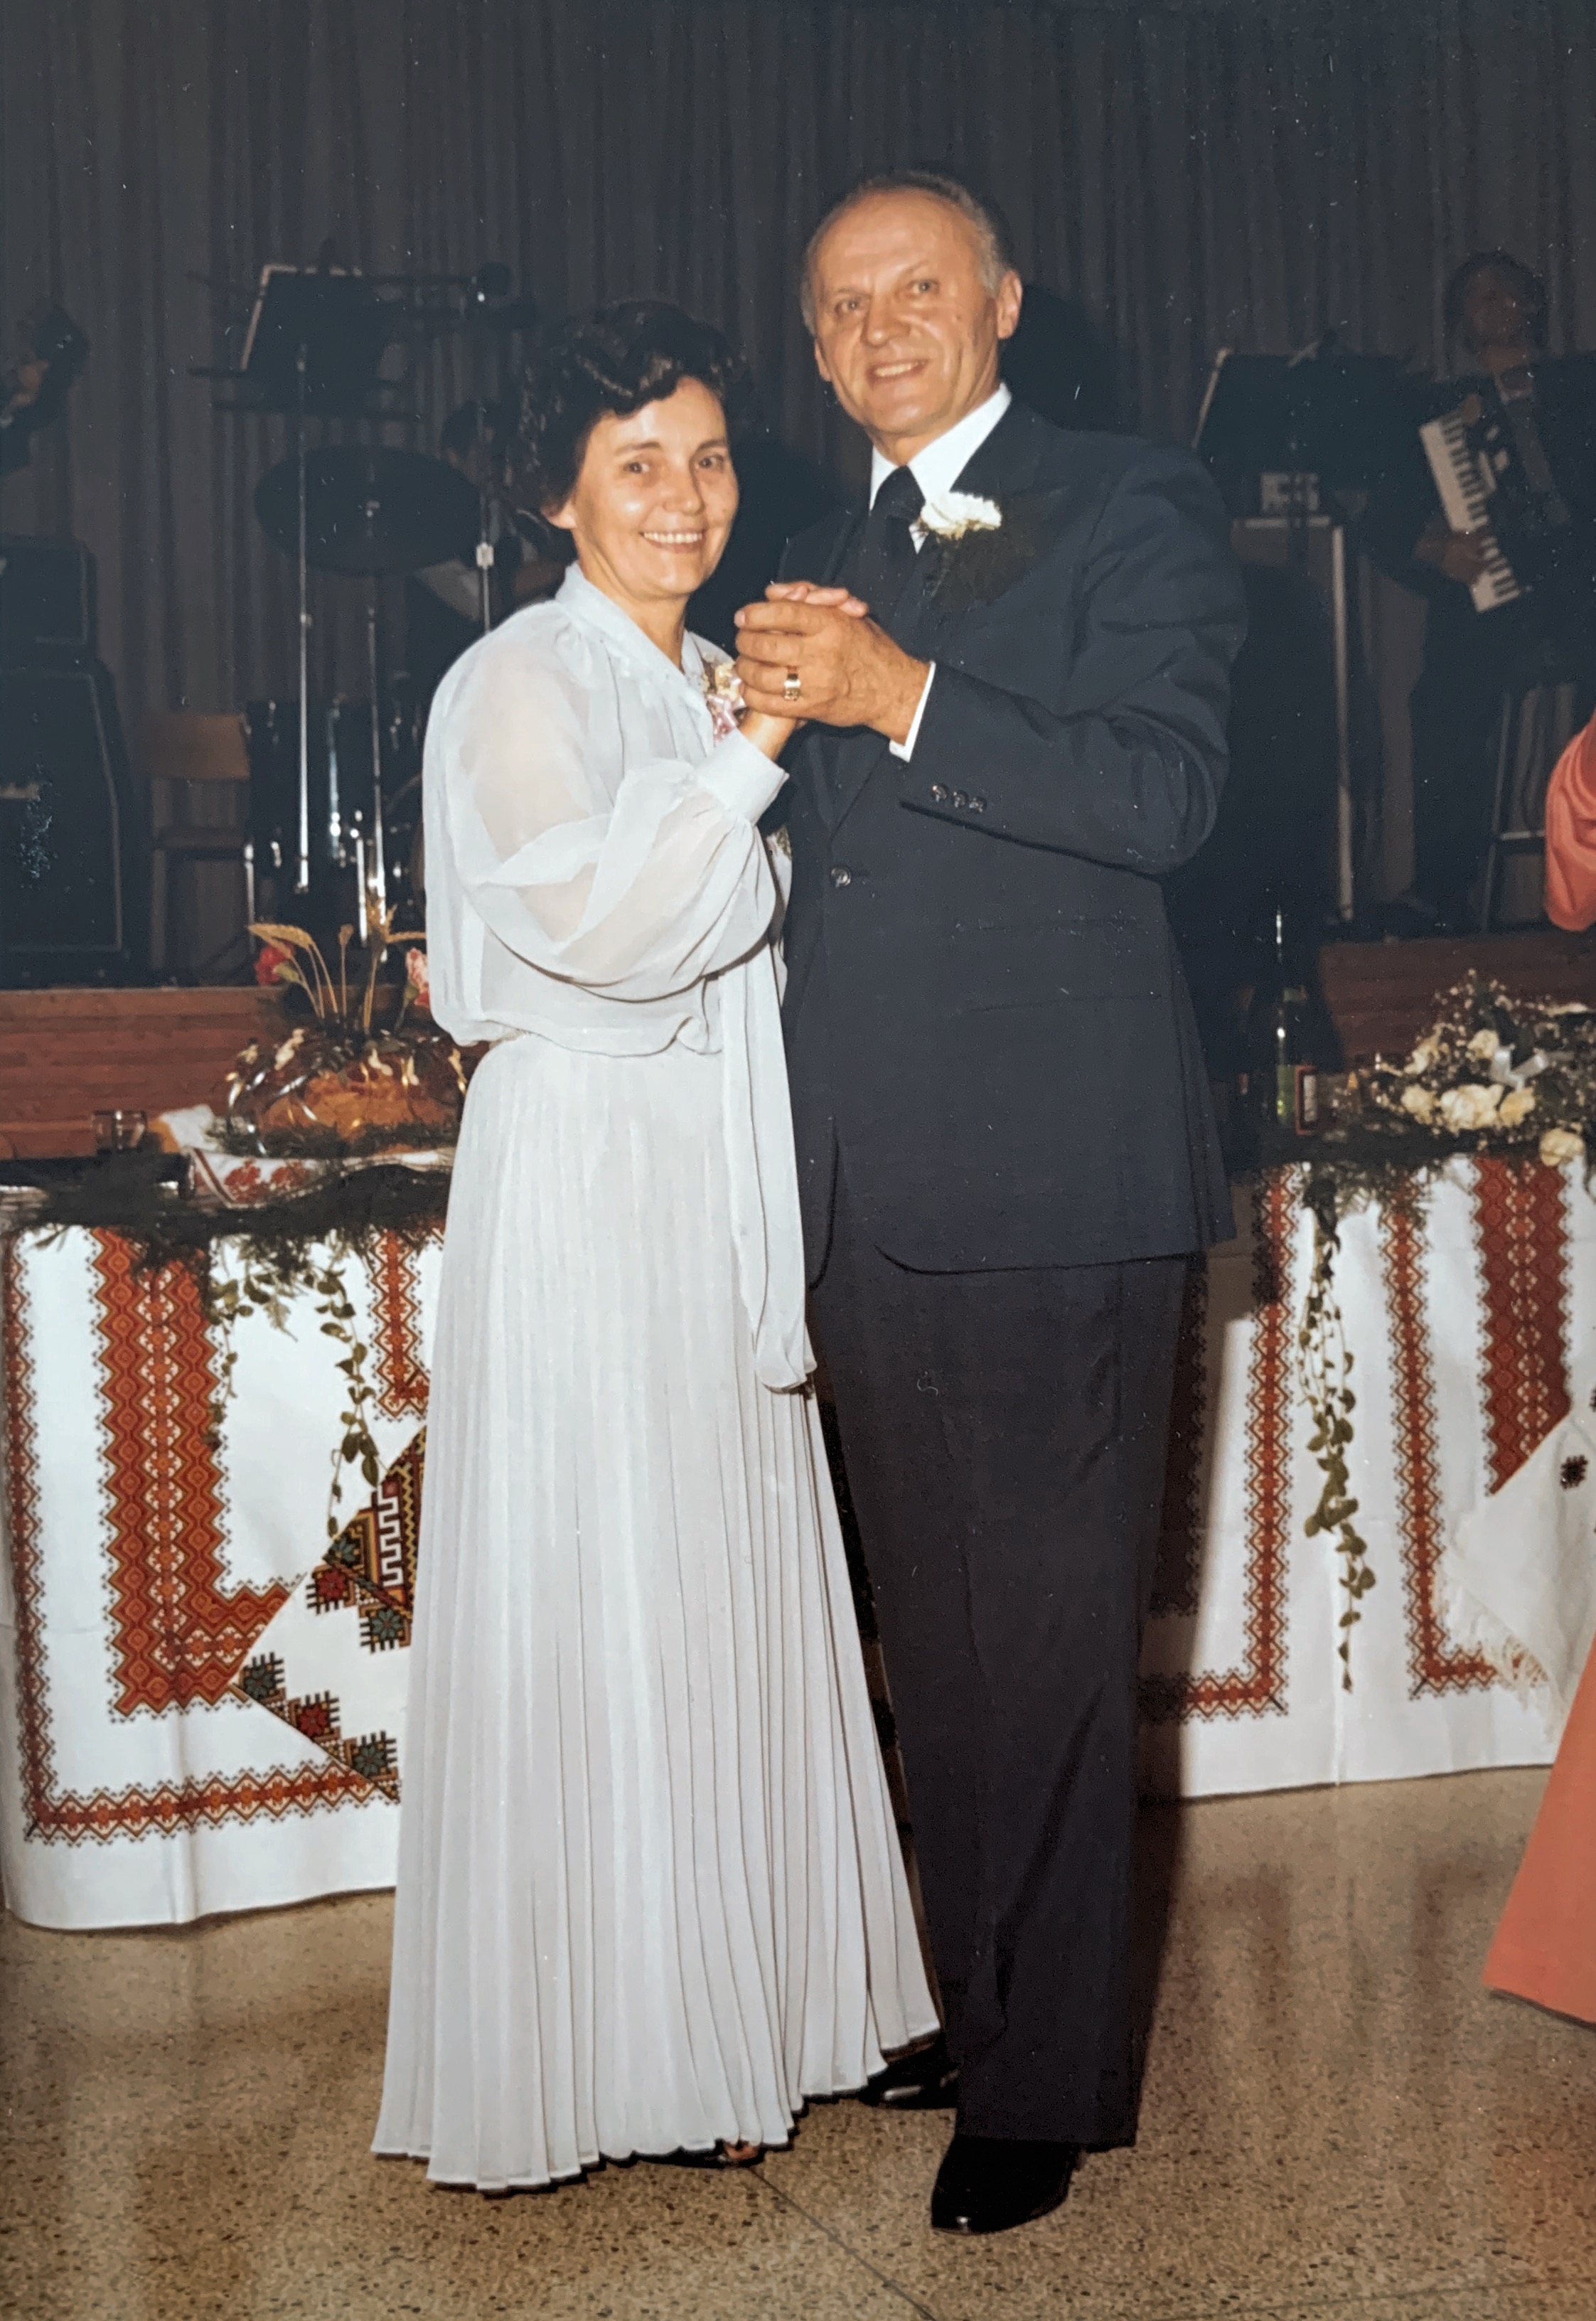 My parents at my wedding 1978!